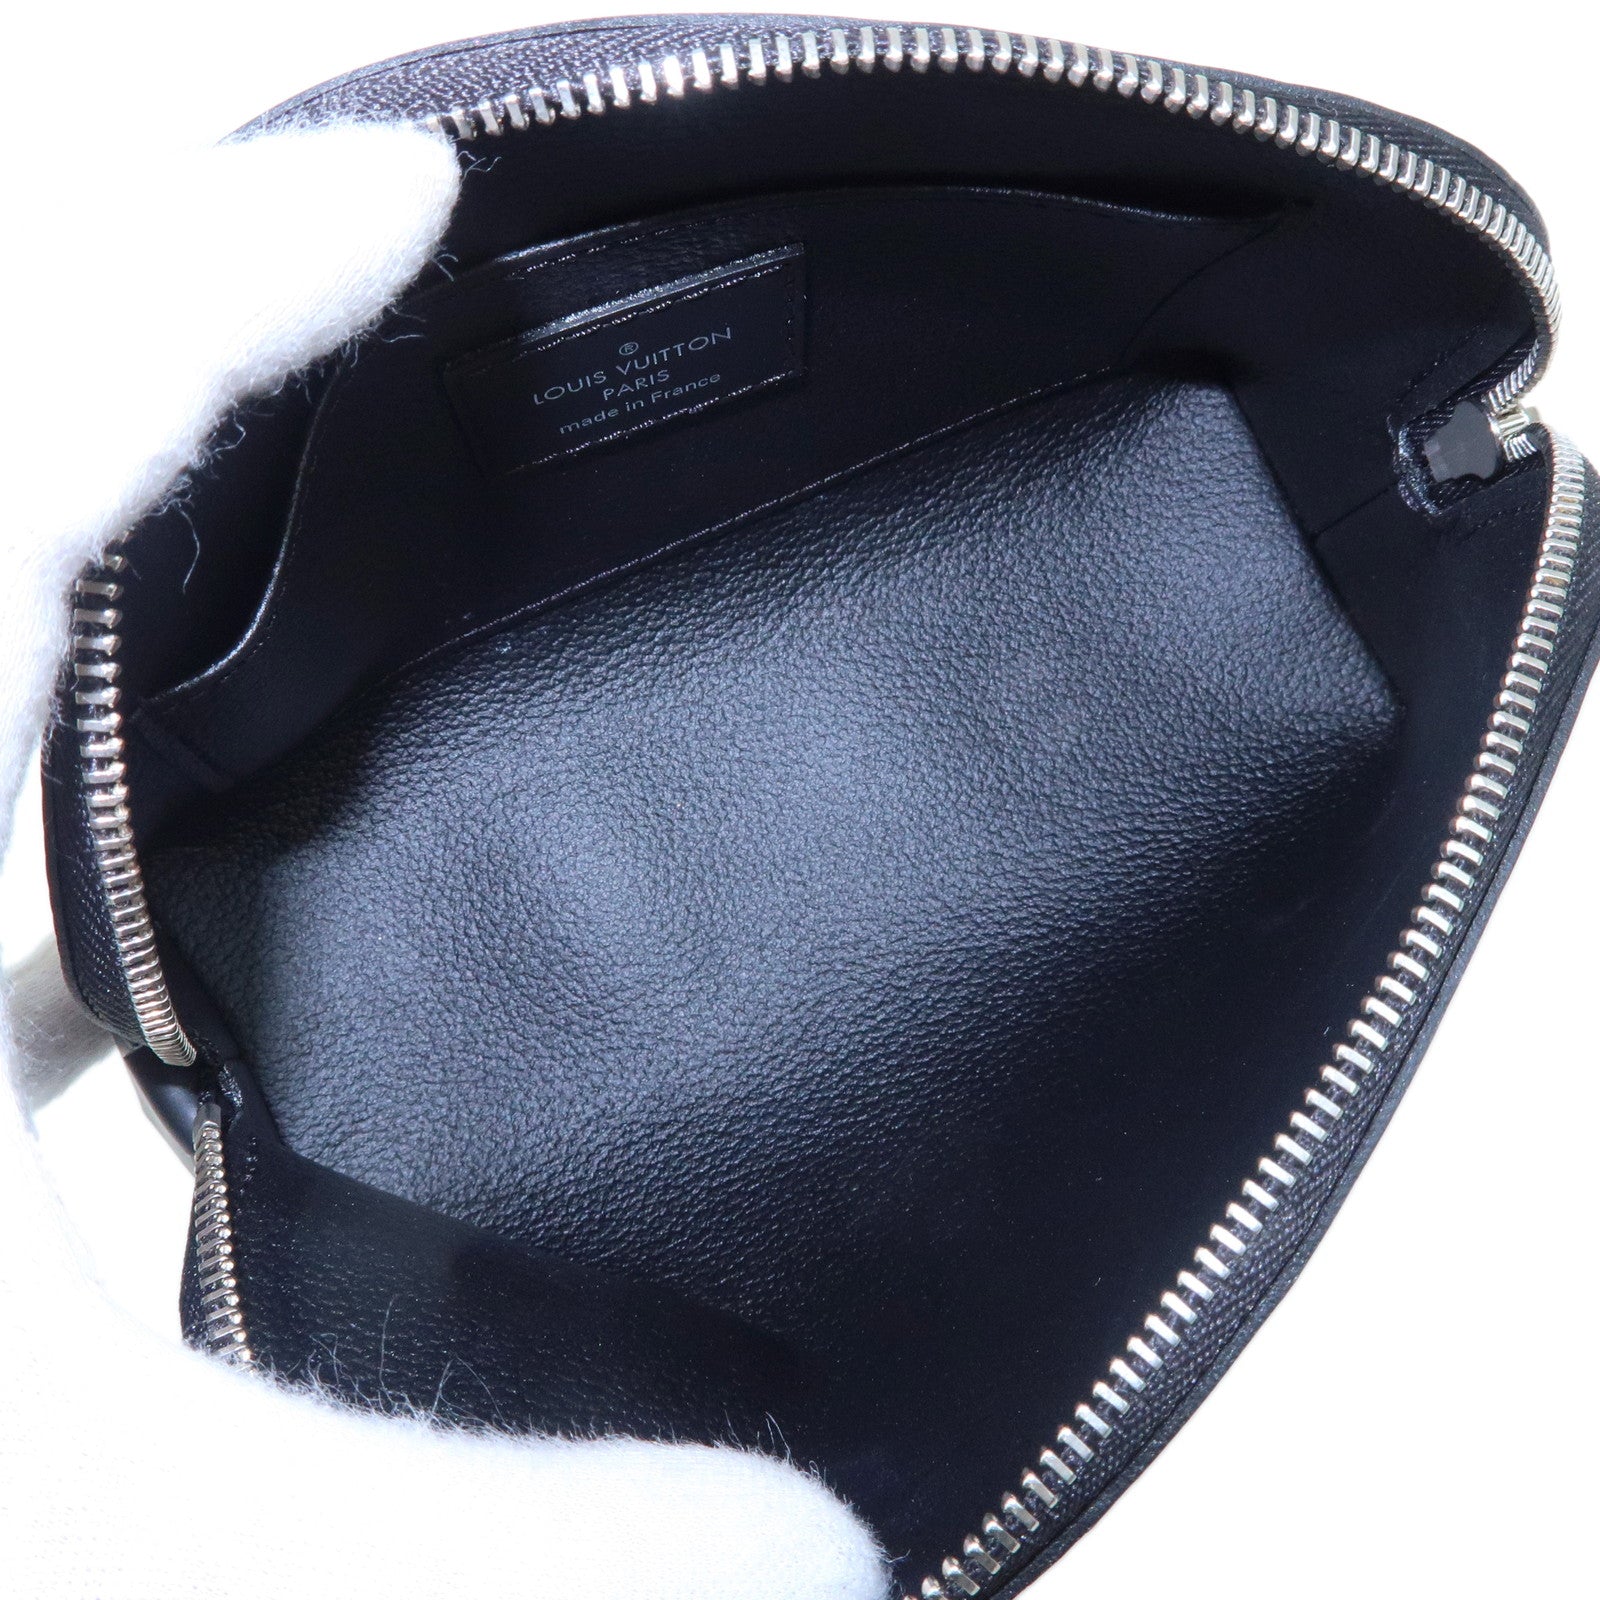 Buy Authentic Pre-owned Louis Vuitton Epi Noir Black Pochette Cosmetic  Pouch Bag Case M41348 220040 from Japan - Buy authentic Plus exclusive  items from Japan